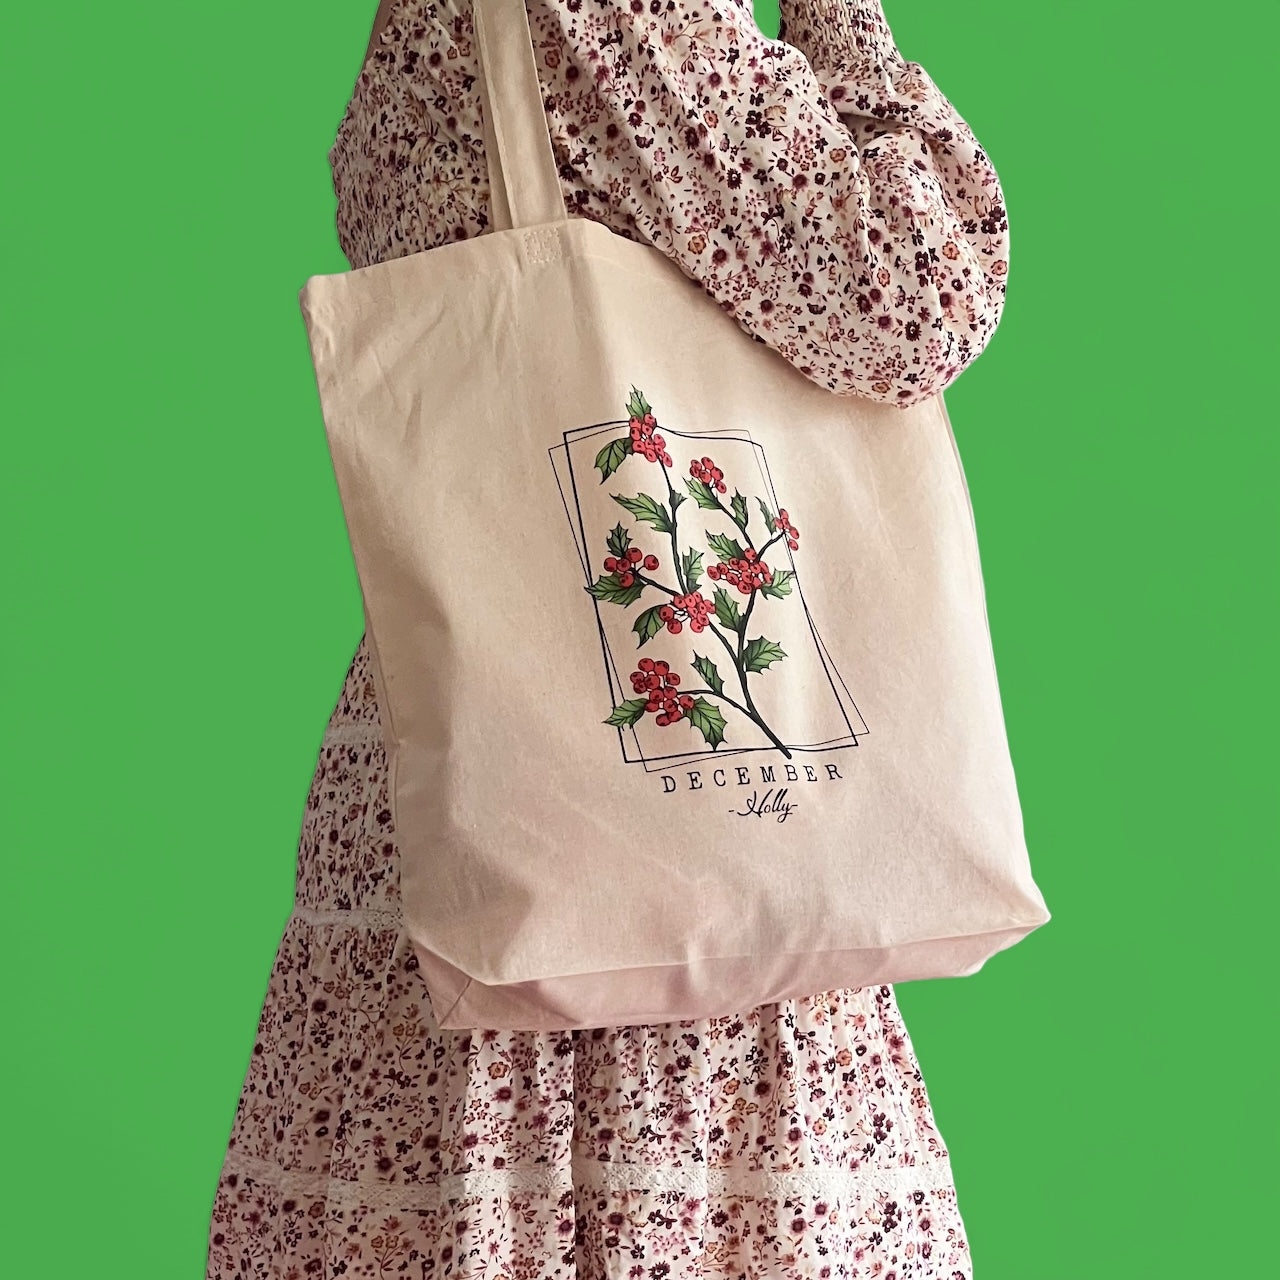 Birth Flower Tote Bag (DECEMBER)